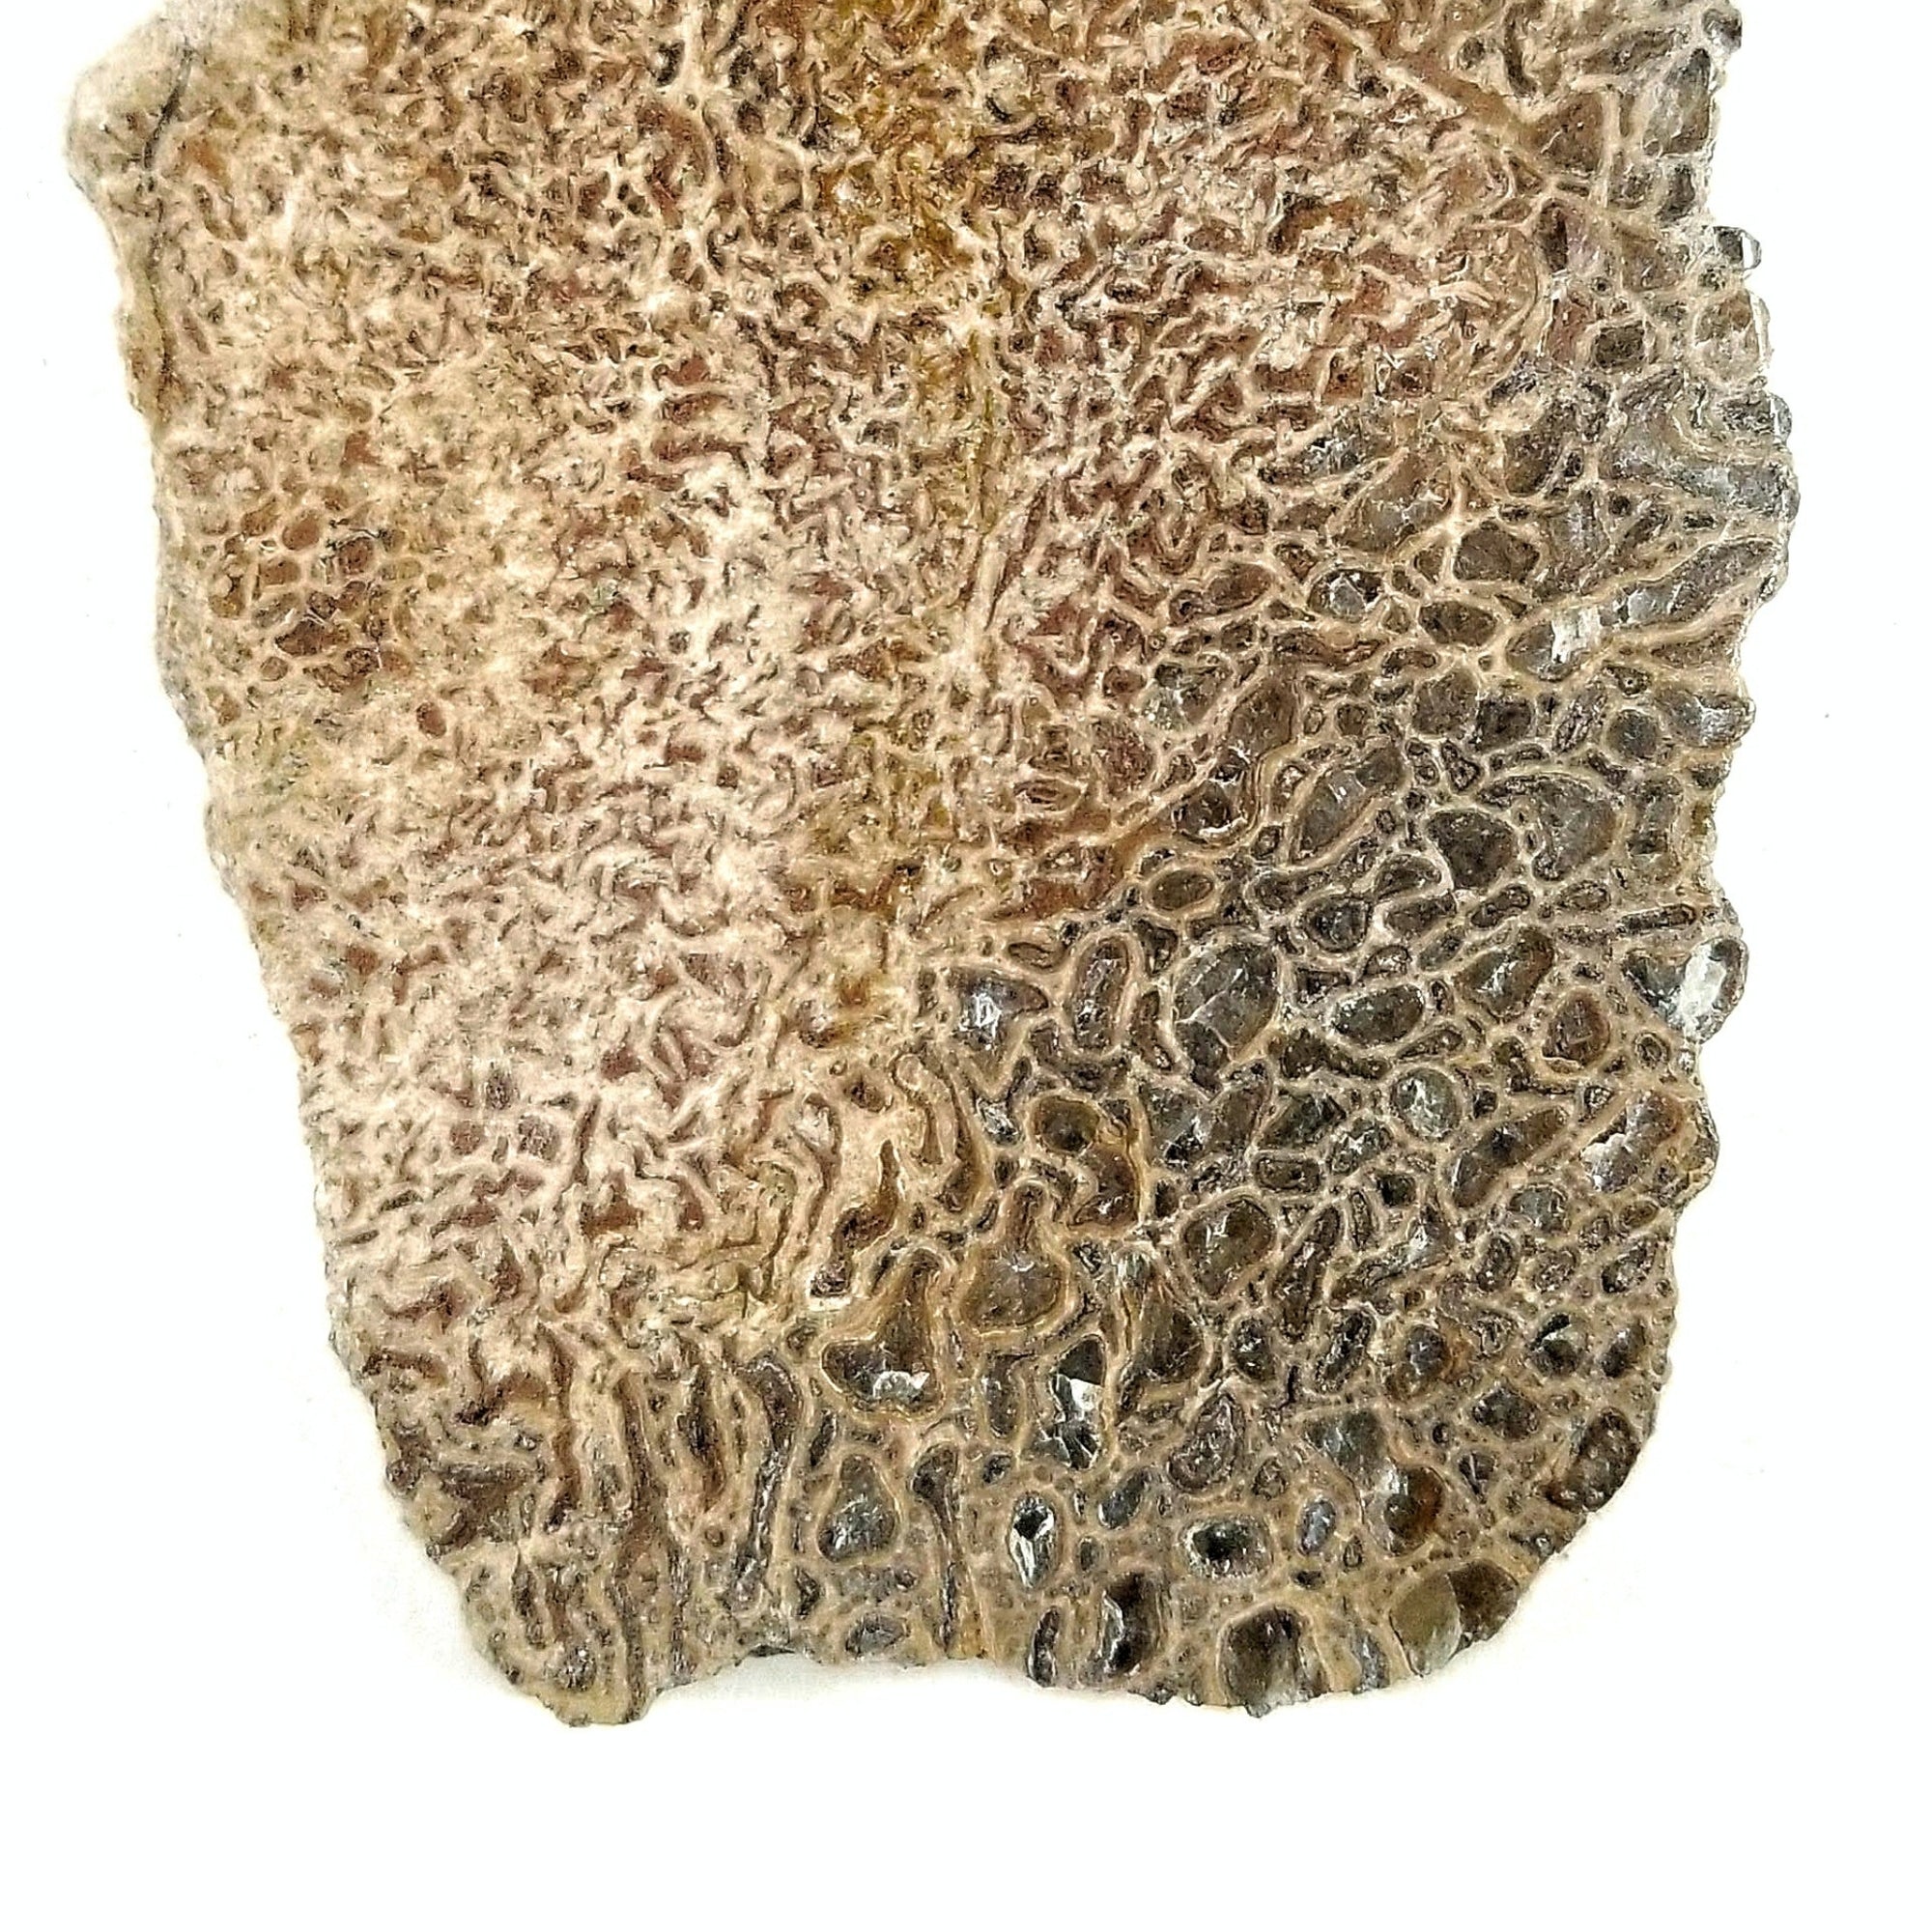 Atlasaurus Bone Slice - Jurassic Period - 167.7 to 164.7 MYA - Morocco